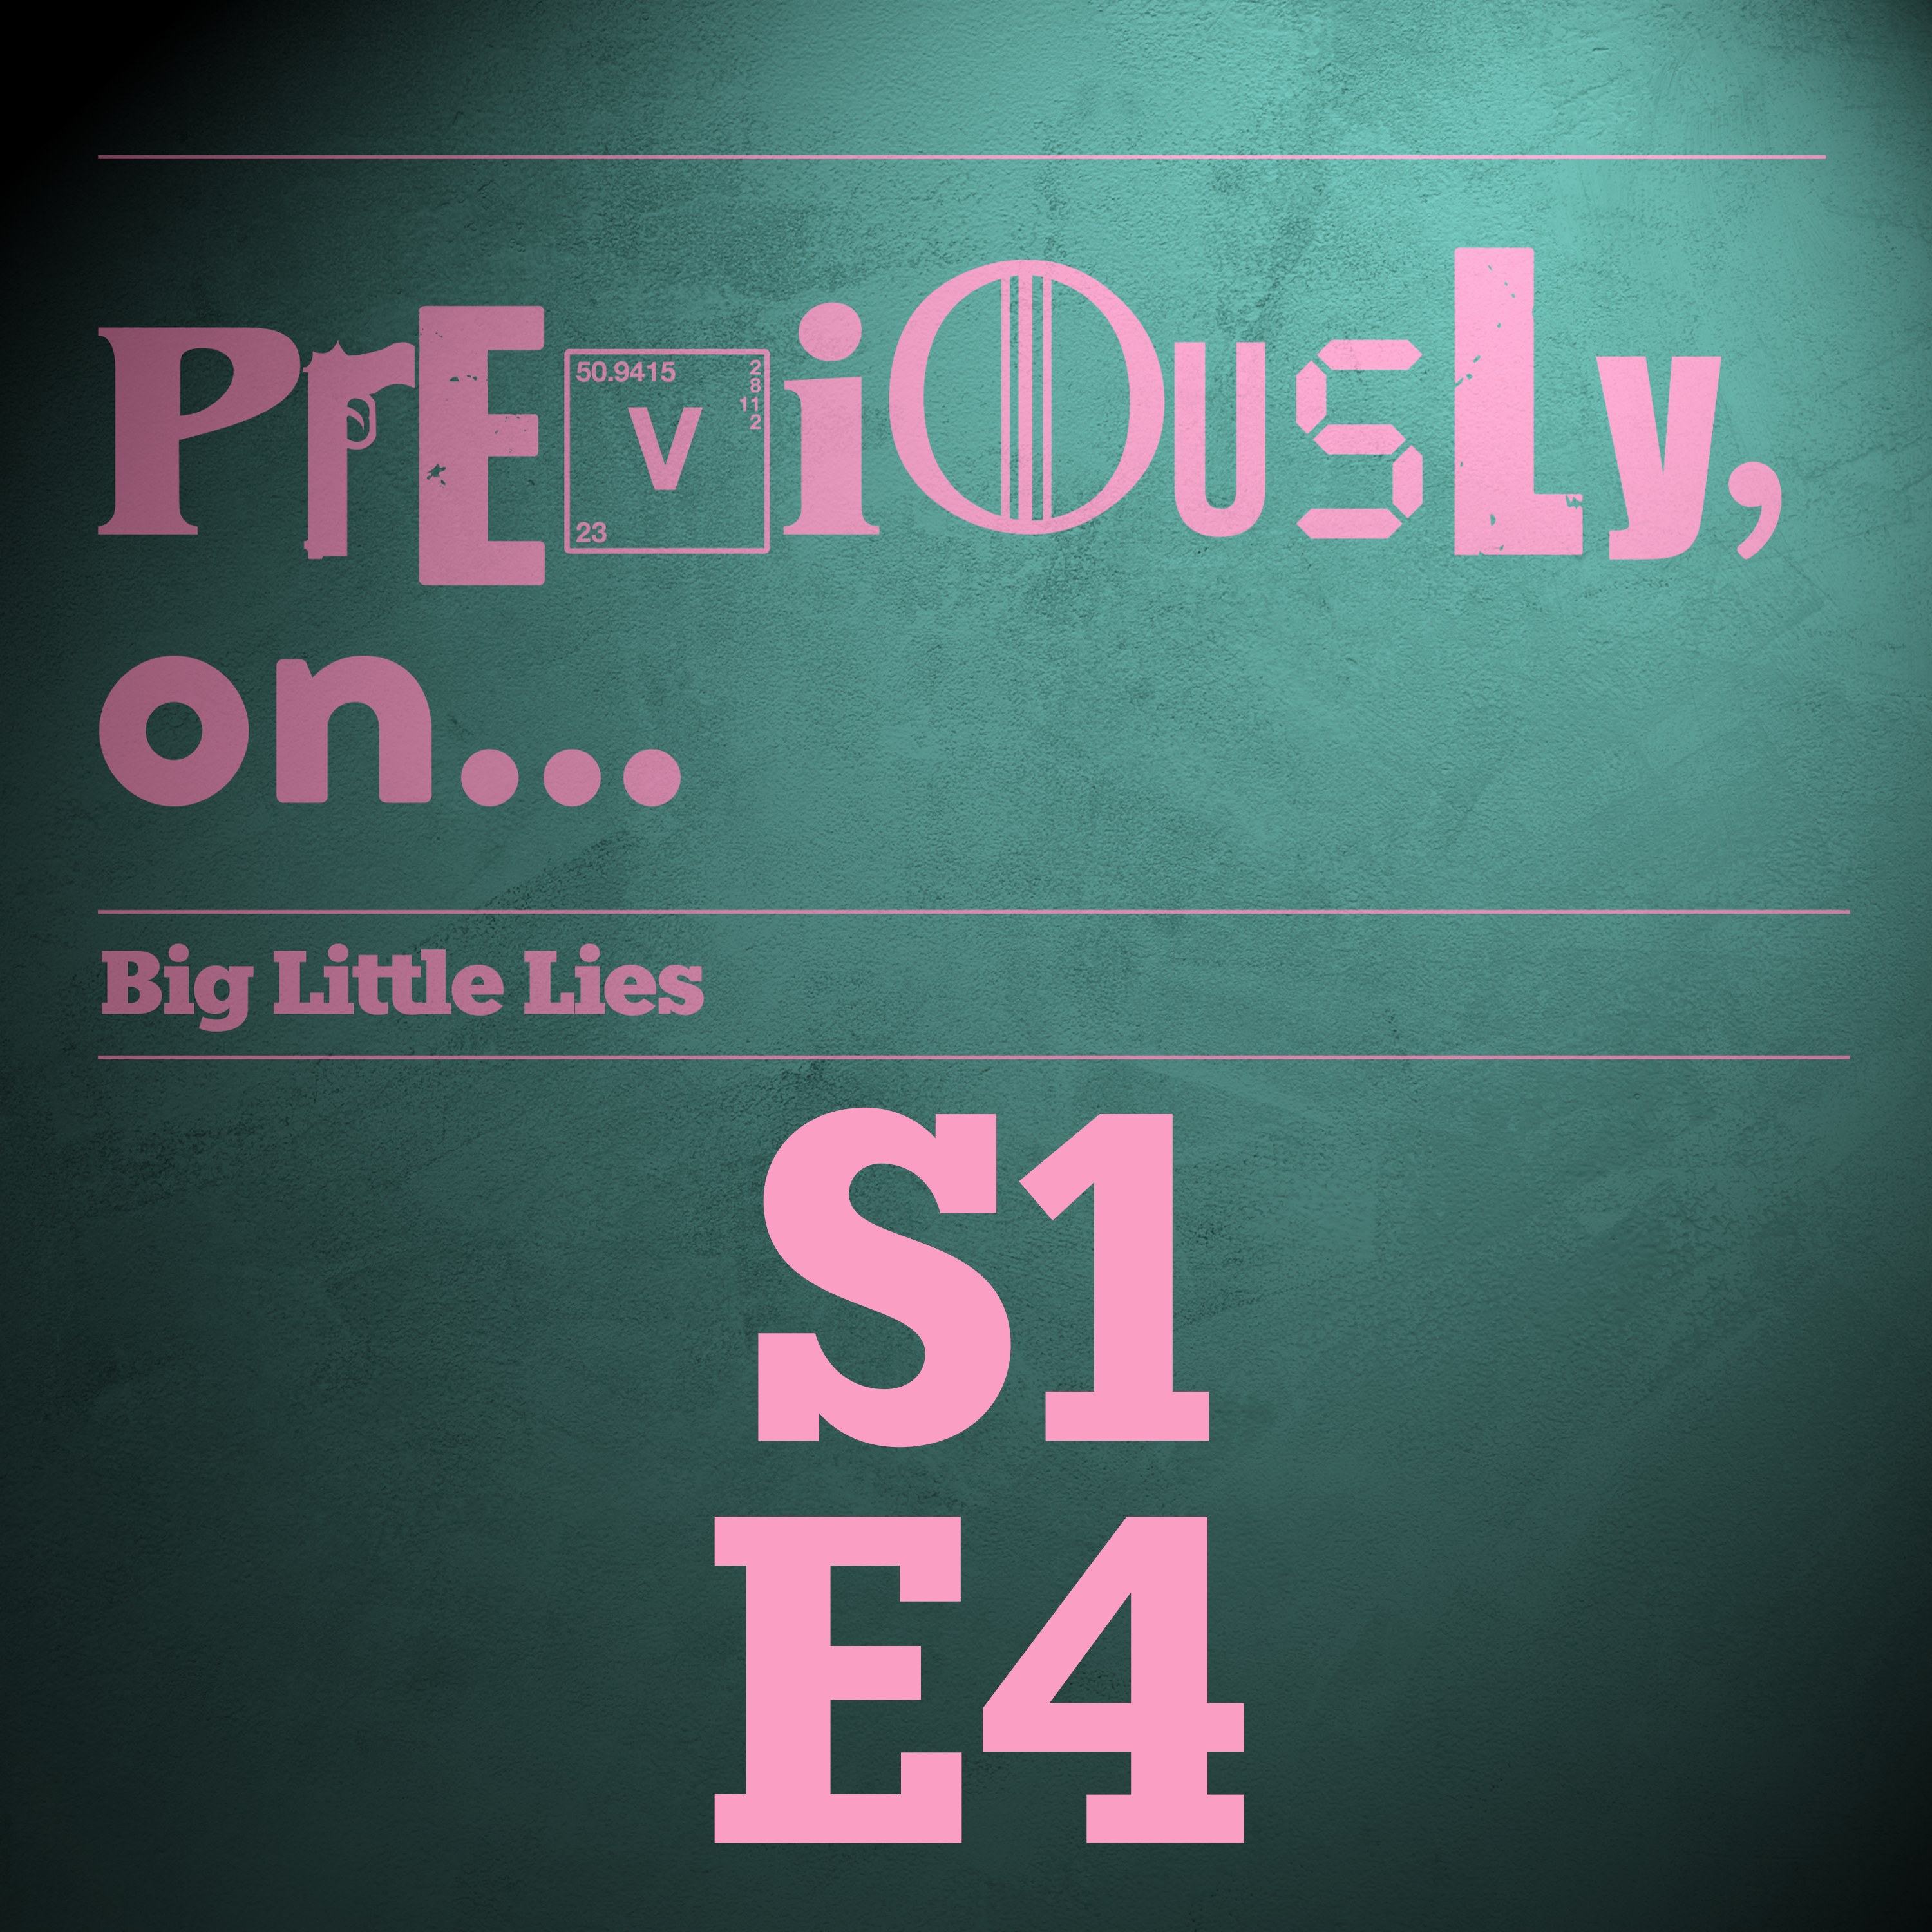 Big Little Lies S1E4 - Push Comes To Shove